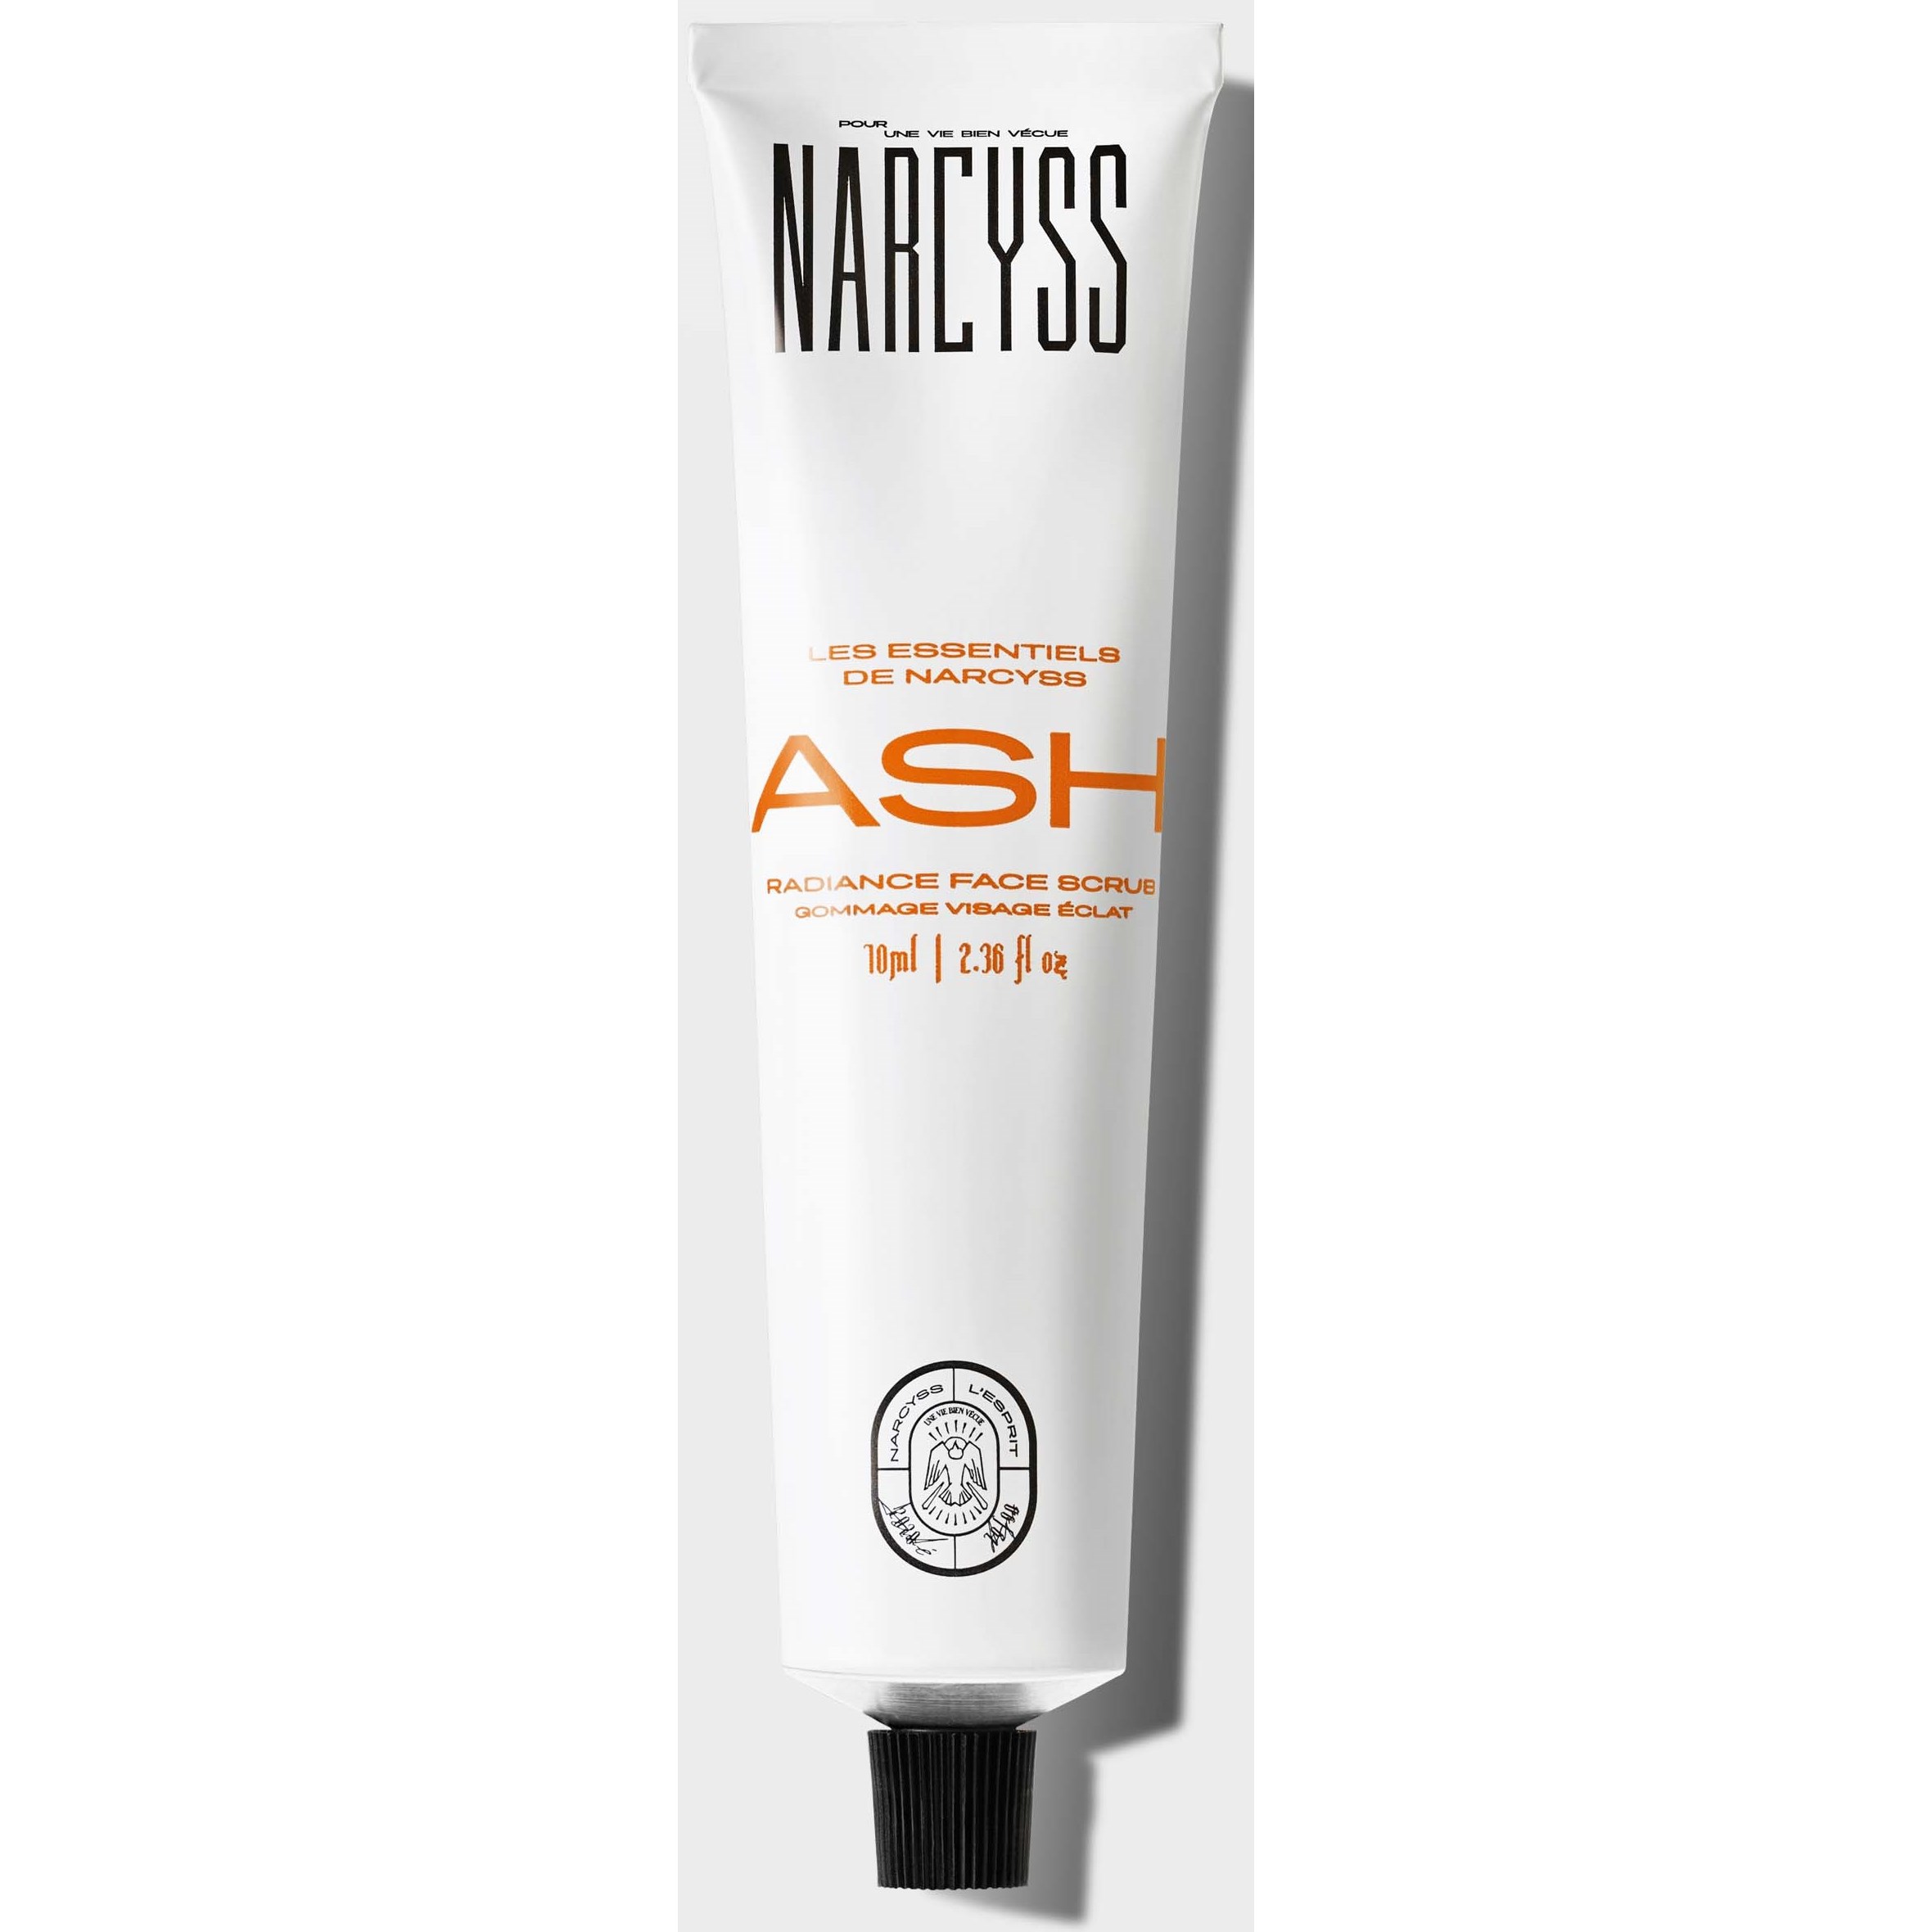 Narcyss Ash 70 ml